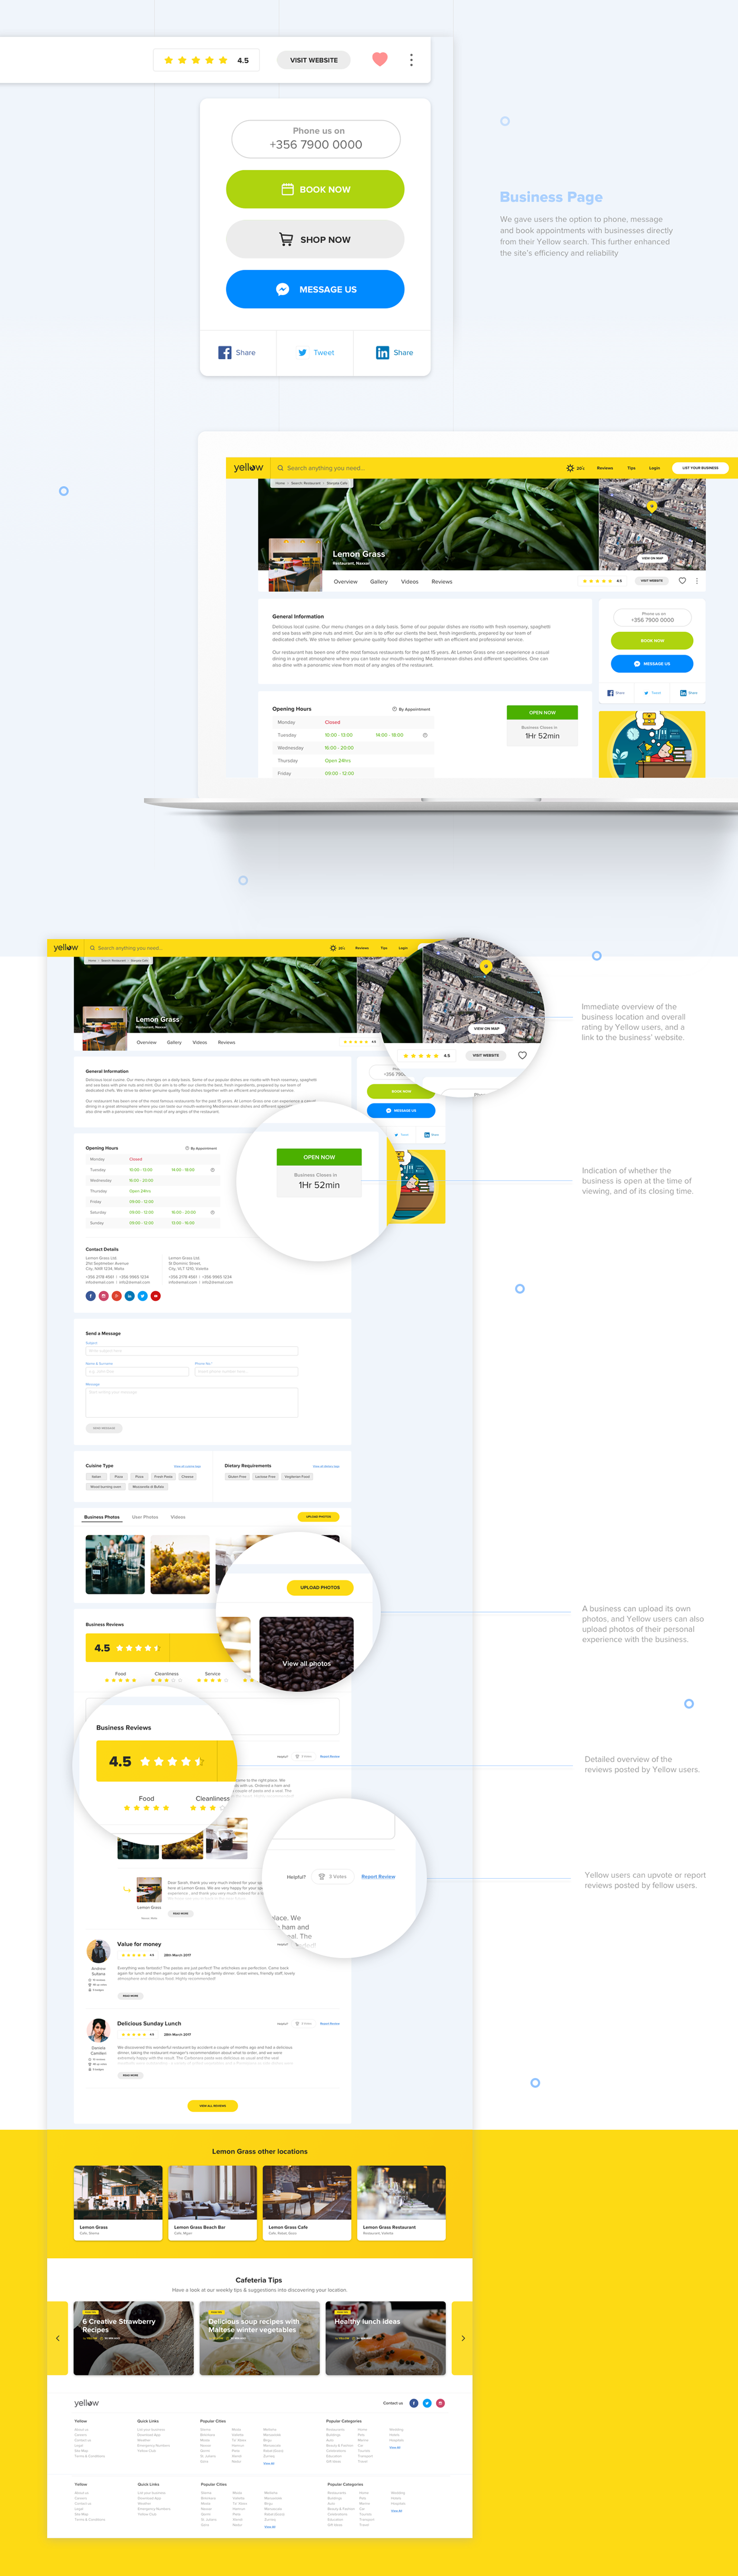 Web Design  wireframes user personas Prototyping Interaction design  brnd wgn malta yellow search dashboard